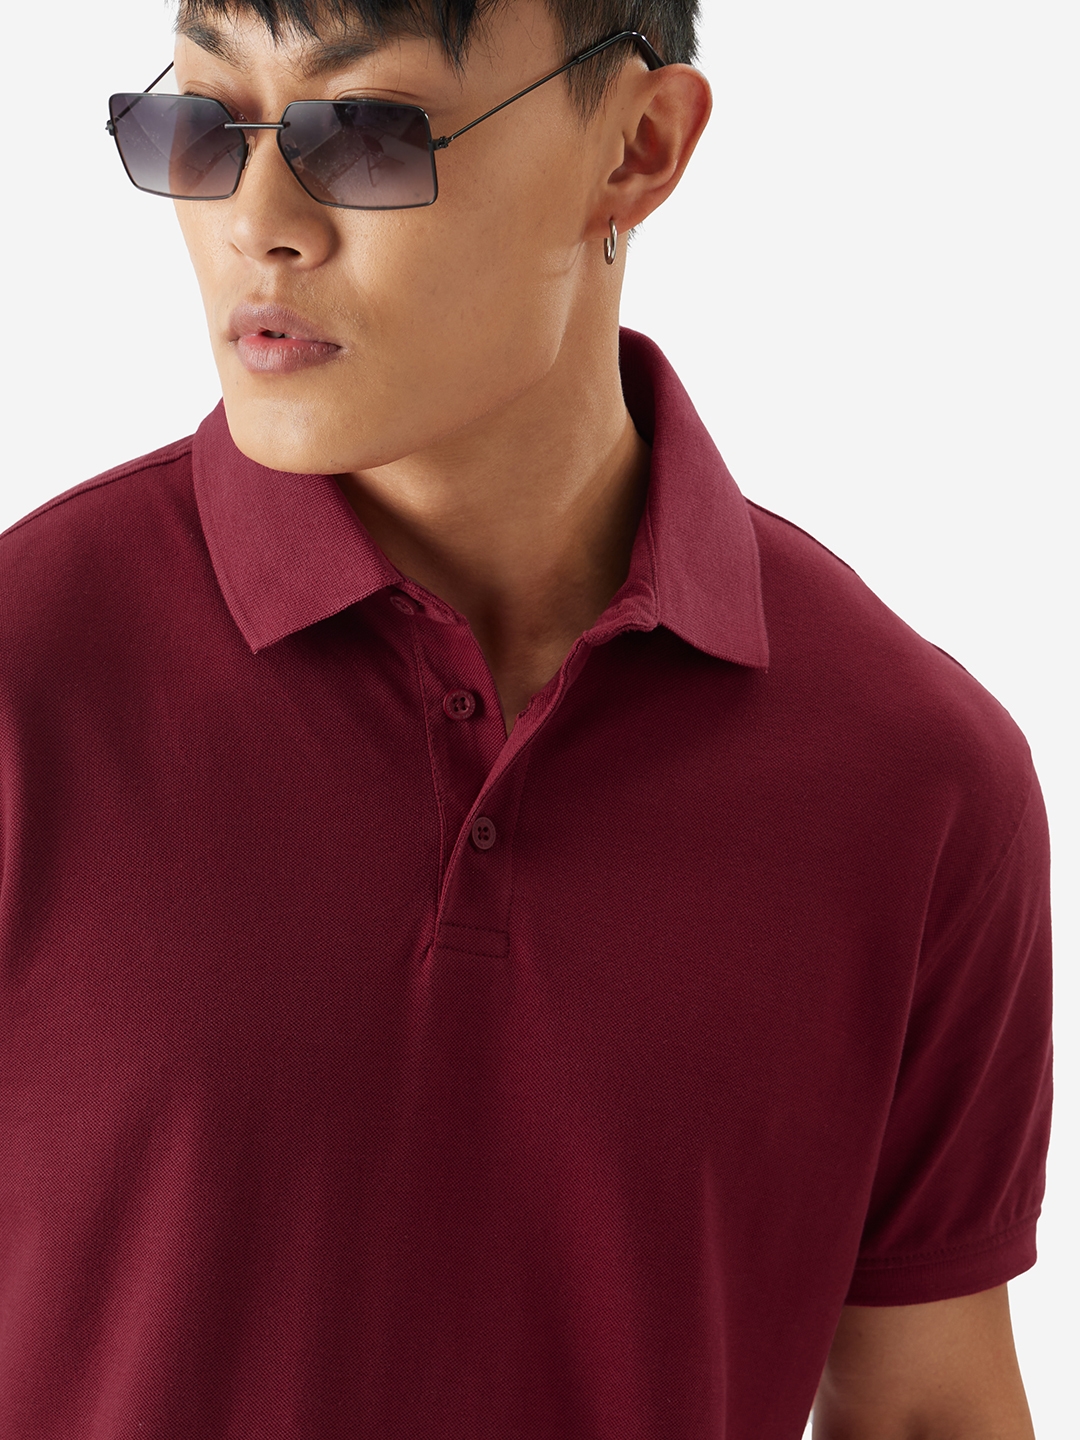 Men's Solids: Rhubarb Polo T-Shirt